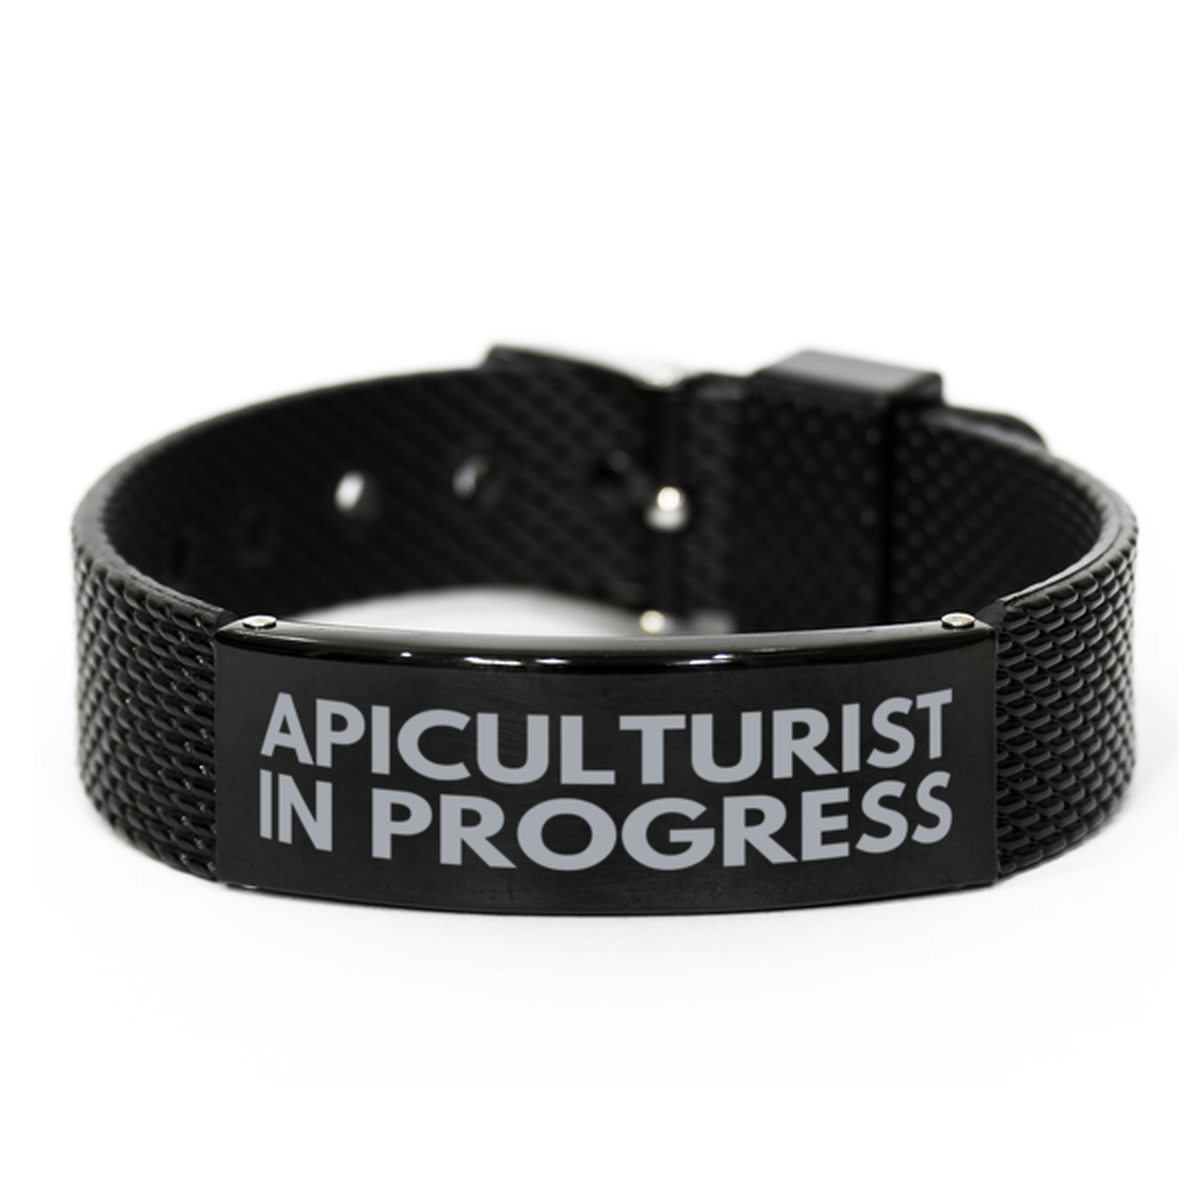 Inspirational Apiculturist Black Shark Mesh Bracelet, Apiculturist In Progress, Best Graduation Gifts for Students